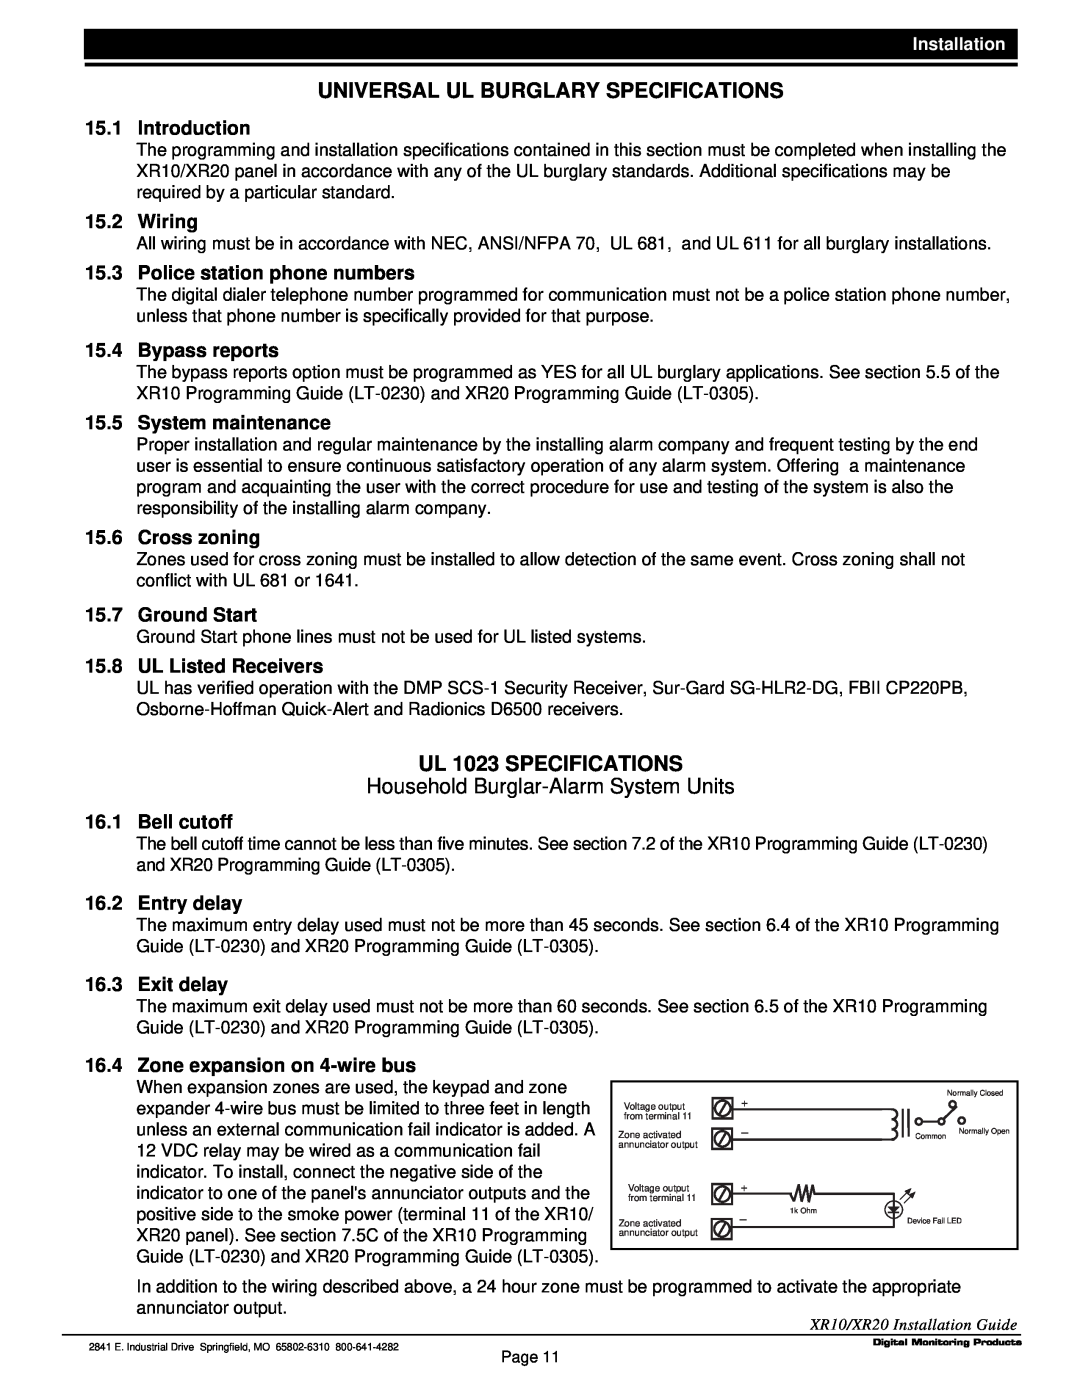 DMP Electronics LT-0229 (5 97) manual Universal Ul Burglary Specifications, UL 1023 SPECIFICATIONS 